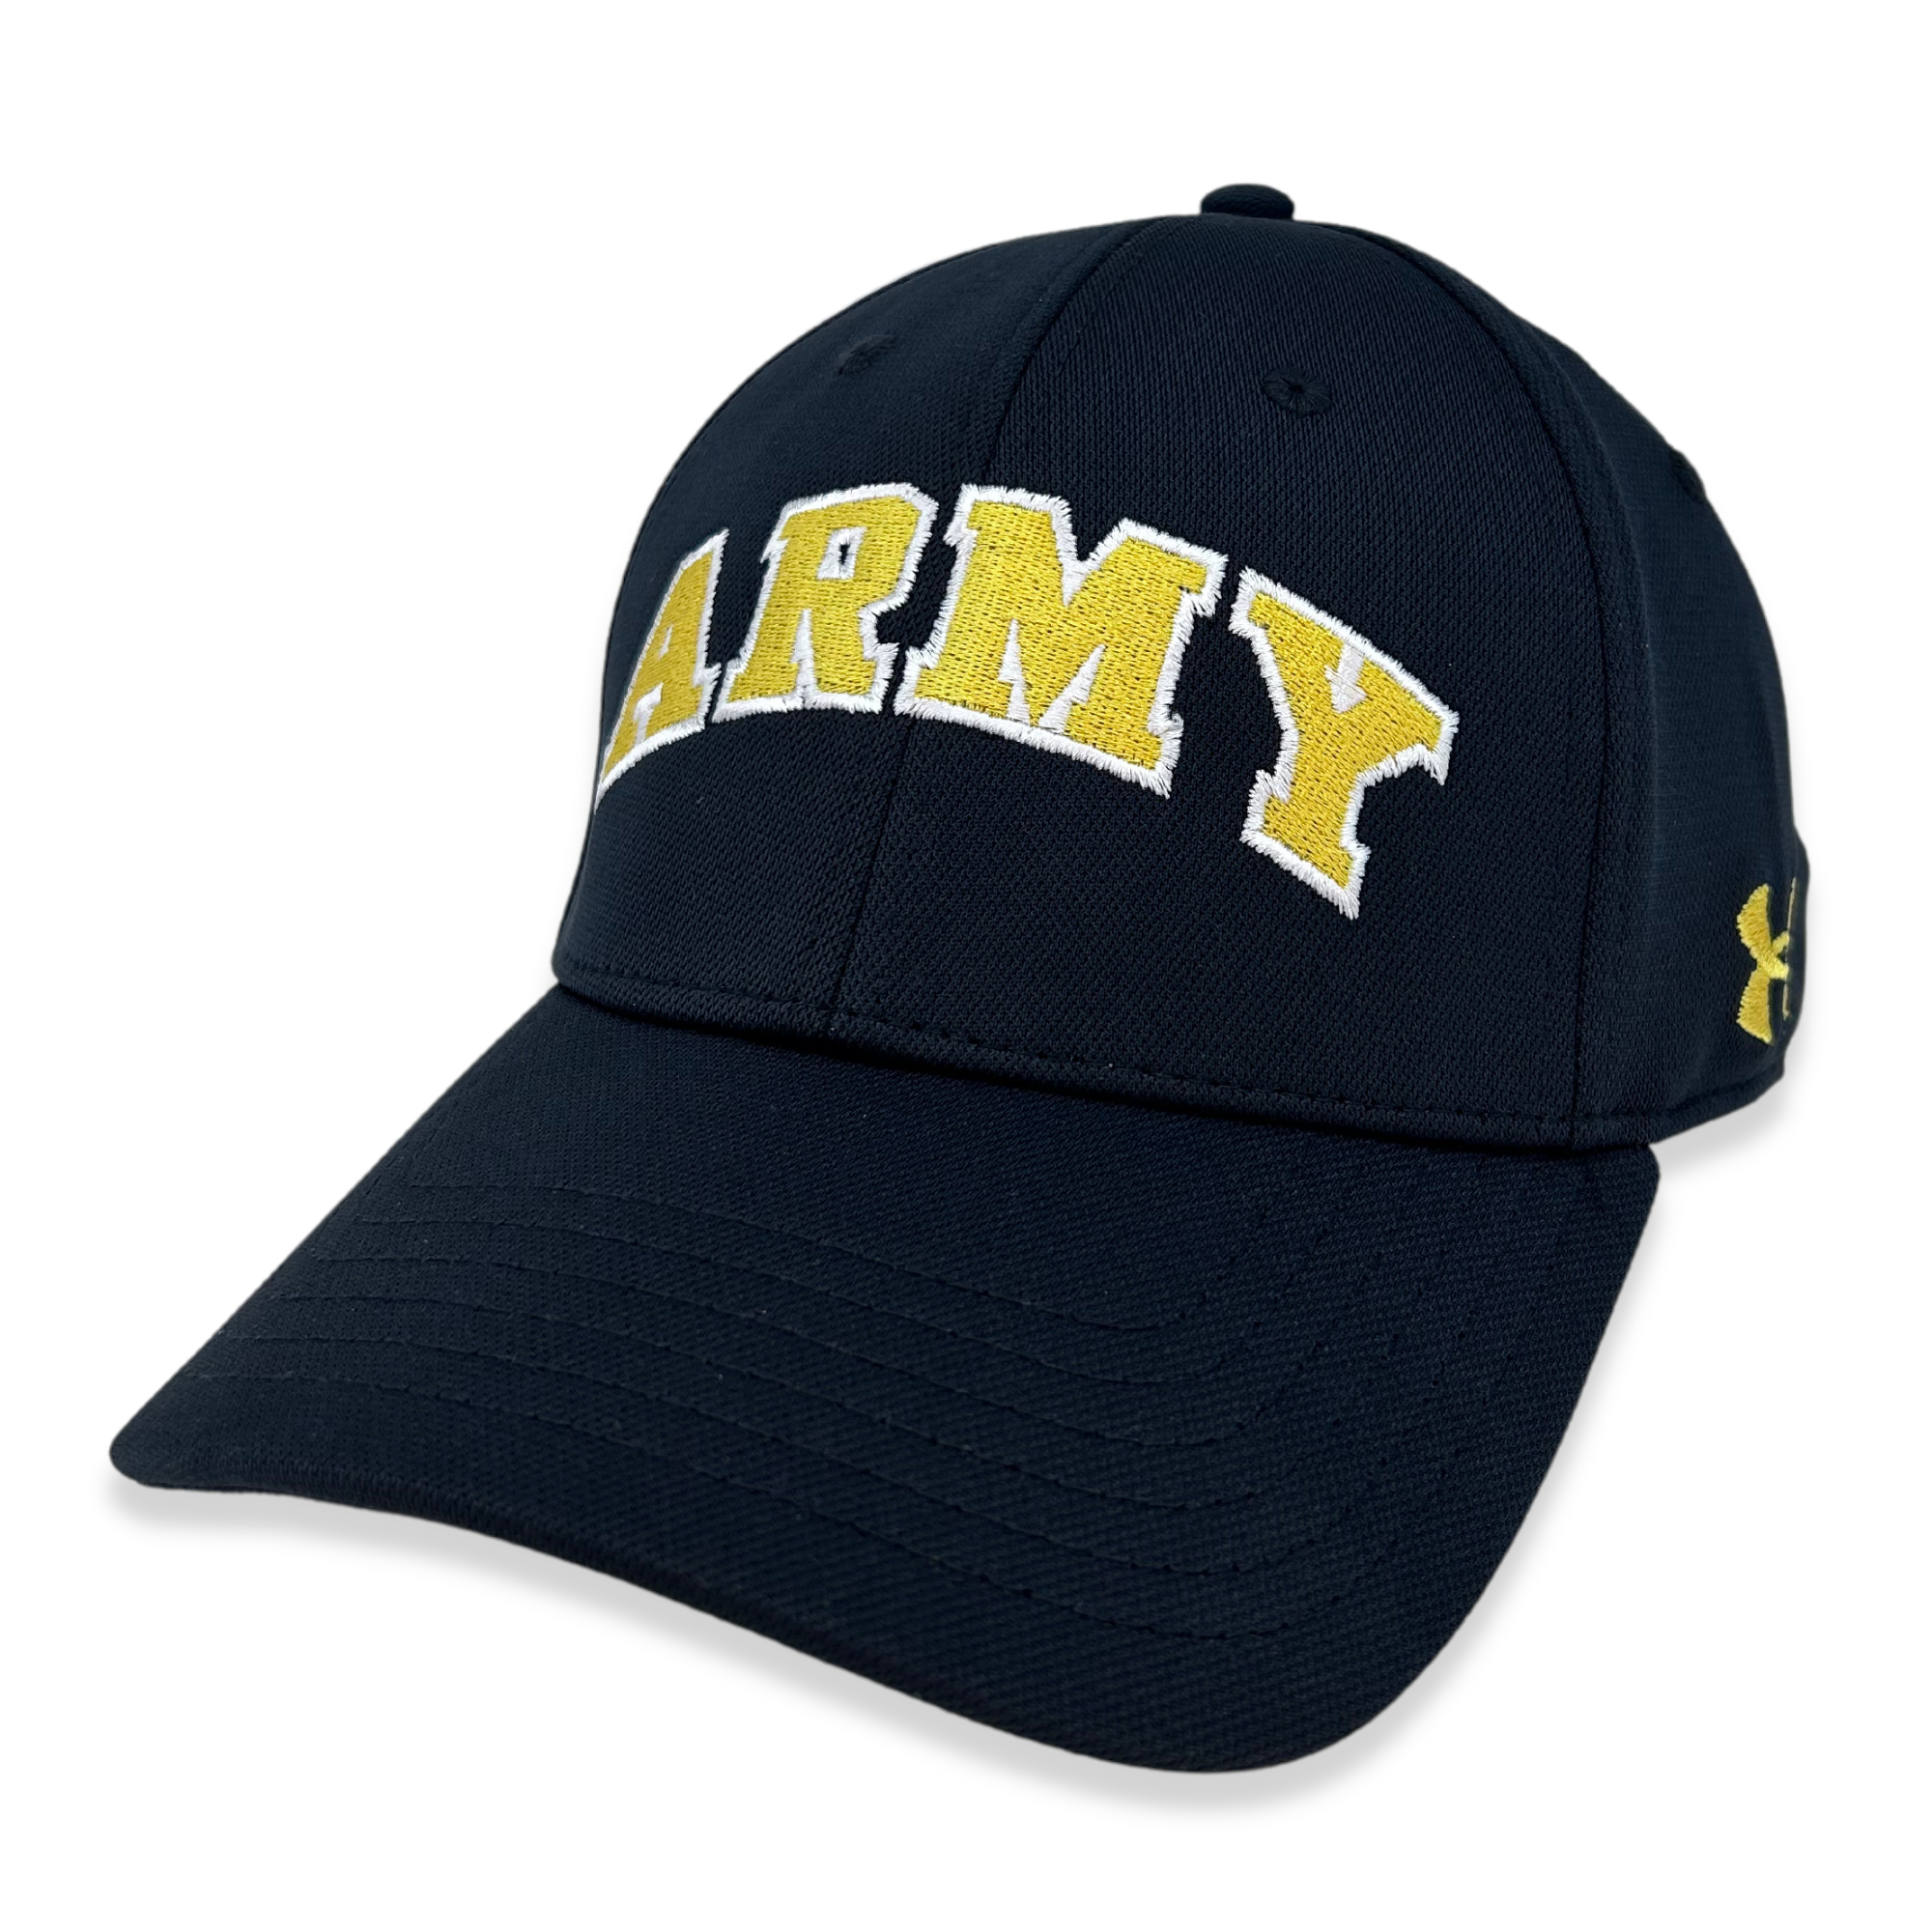 Armour Fit Flex Under Blitzing (Black) Army Hat